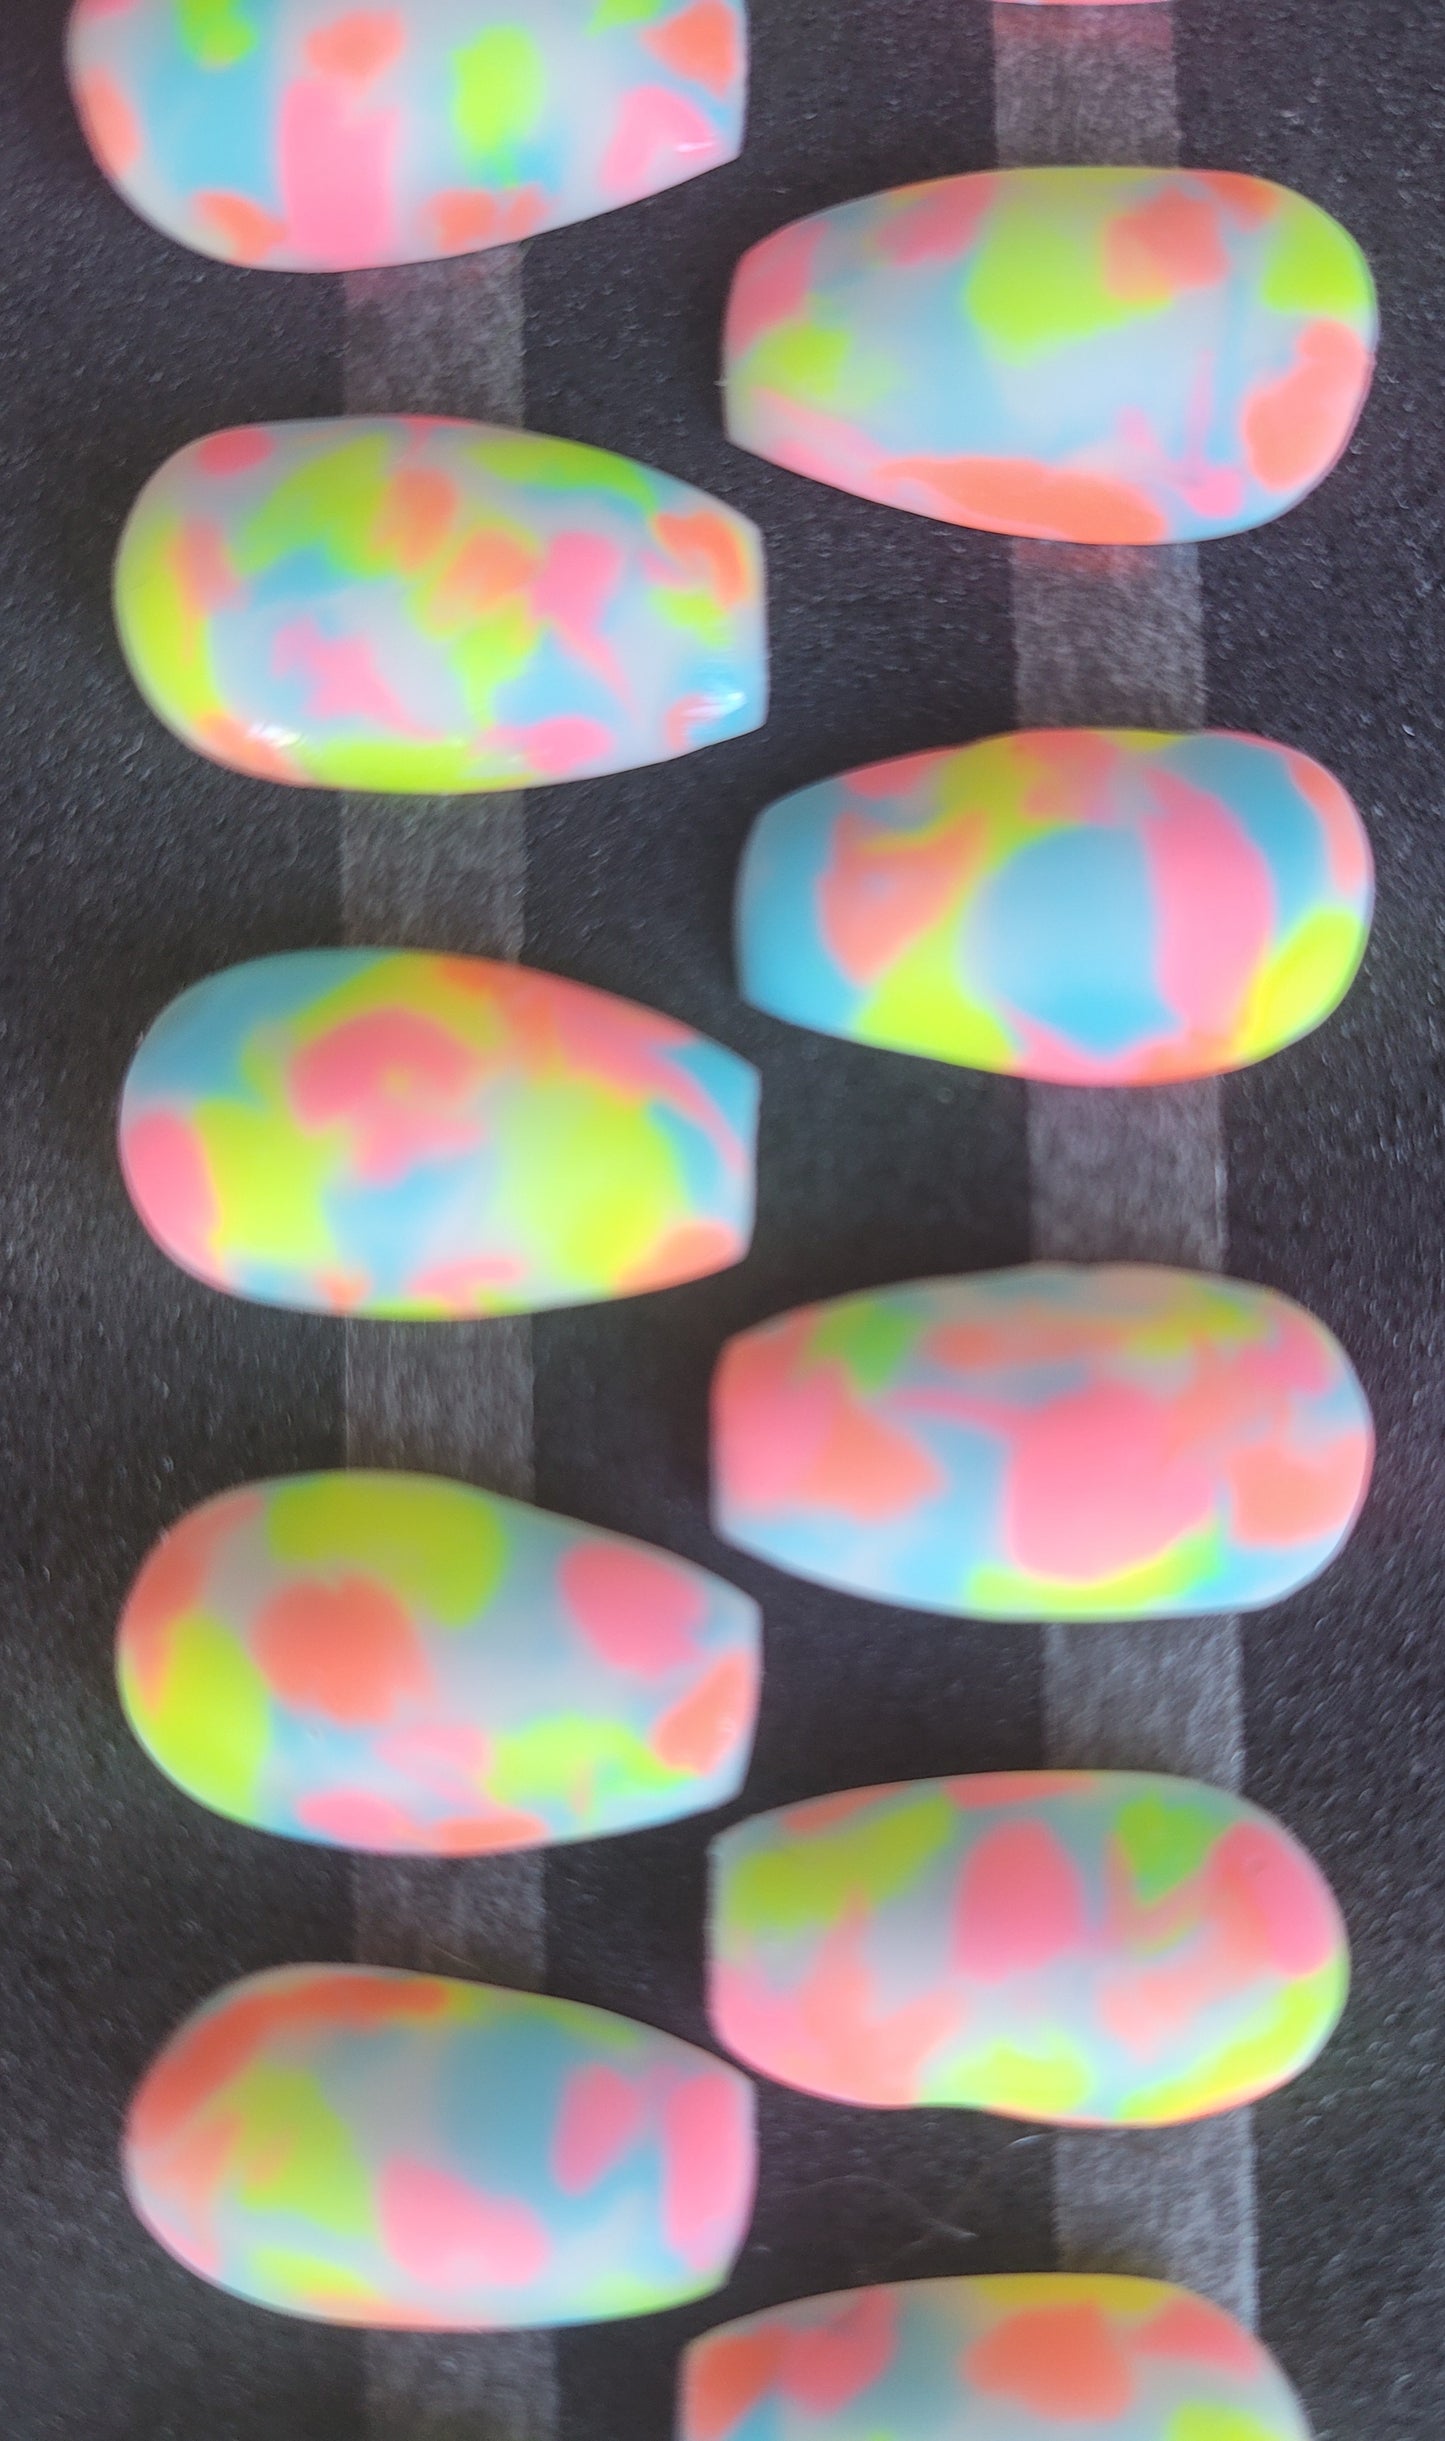 Psycadelic blur luminous nails